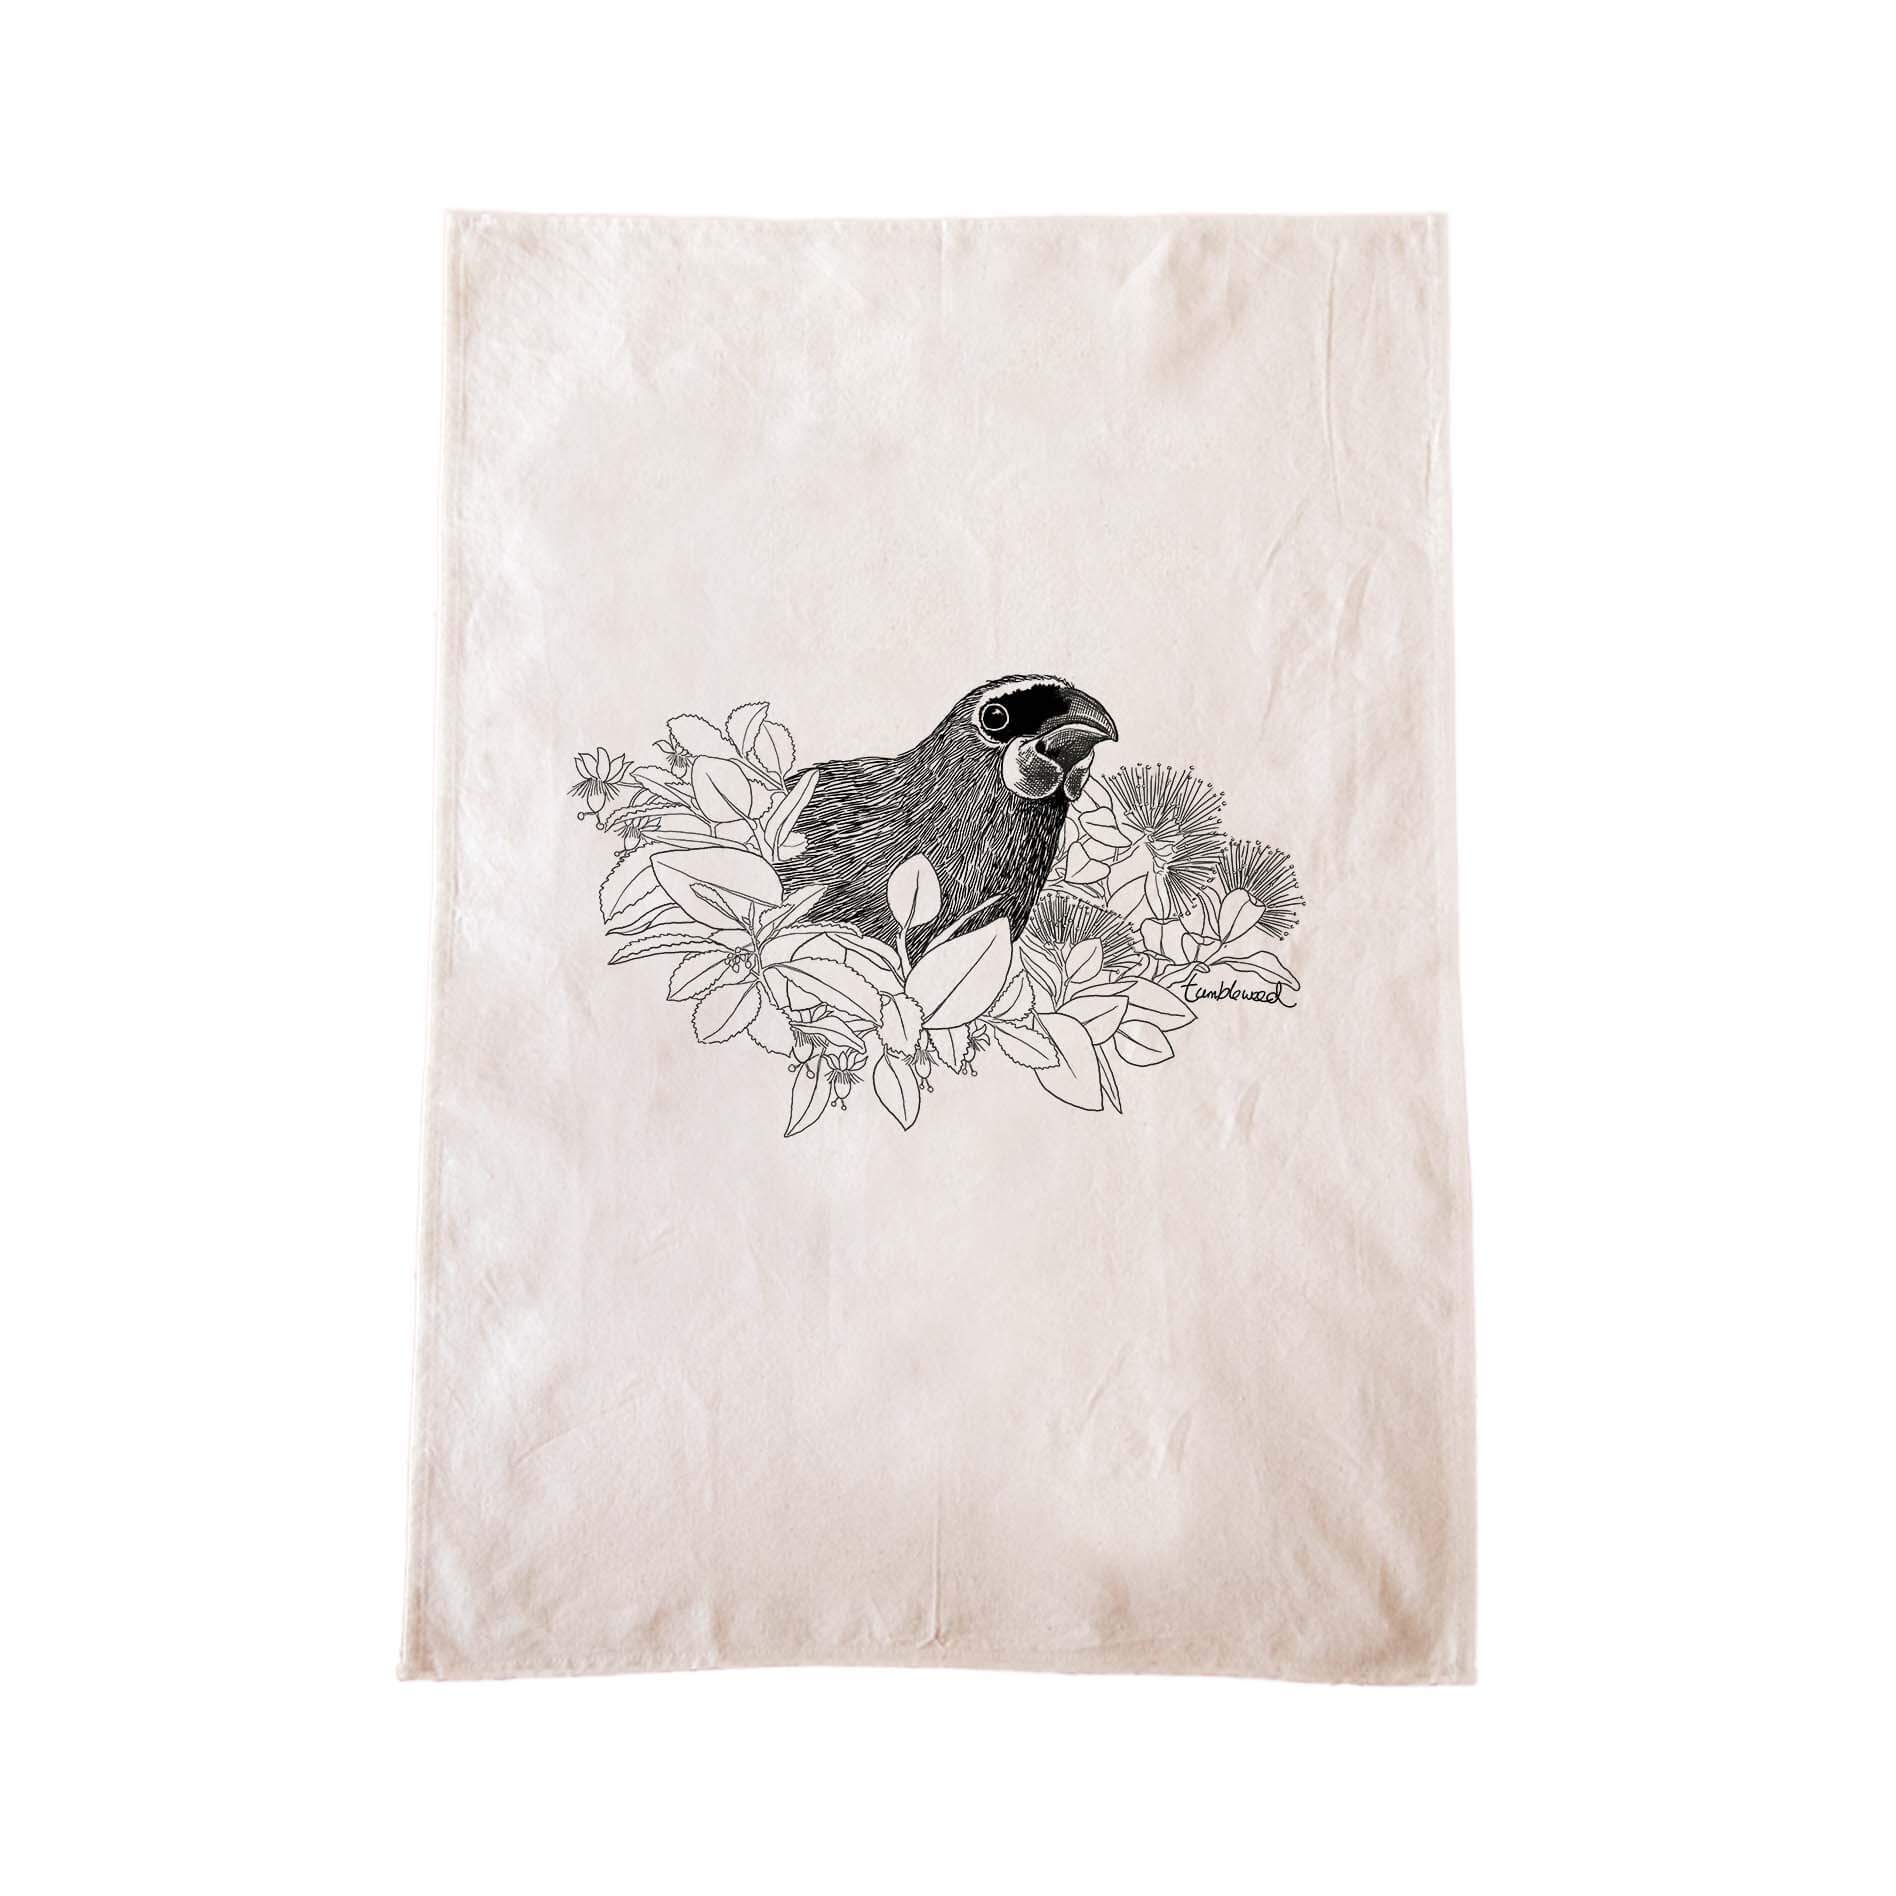 Off-white cotton tea towel with a screen printed Kōkako design.